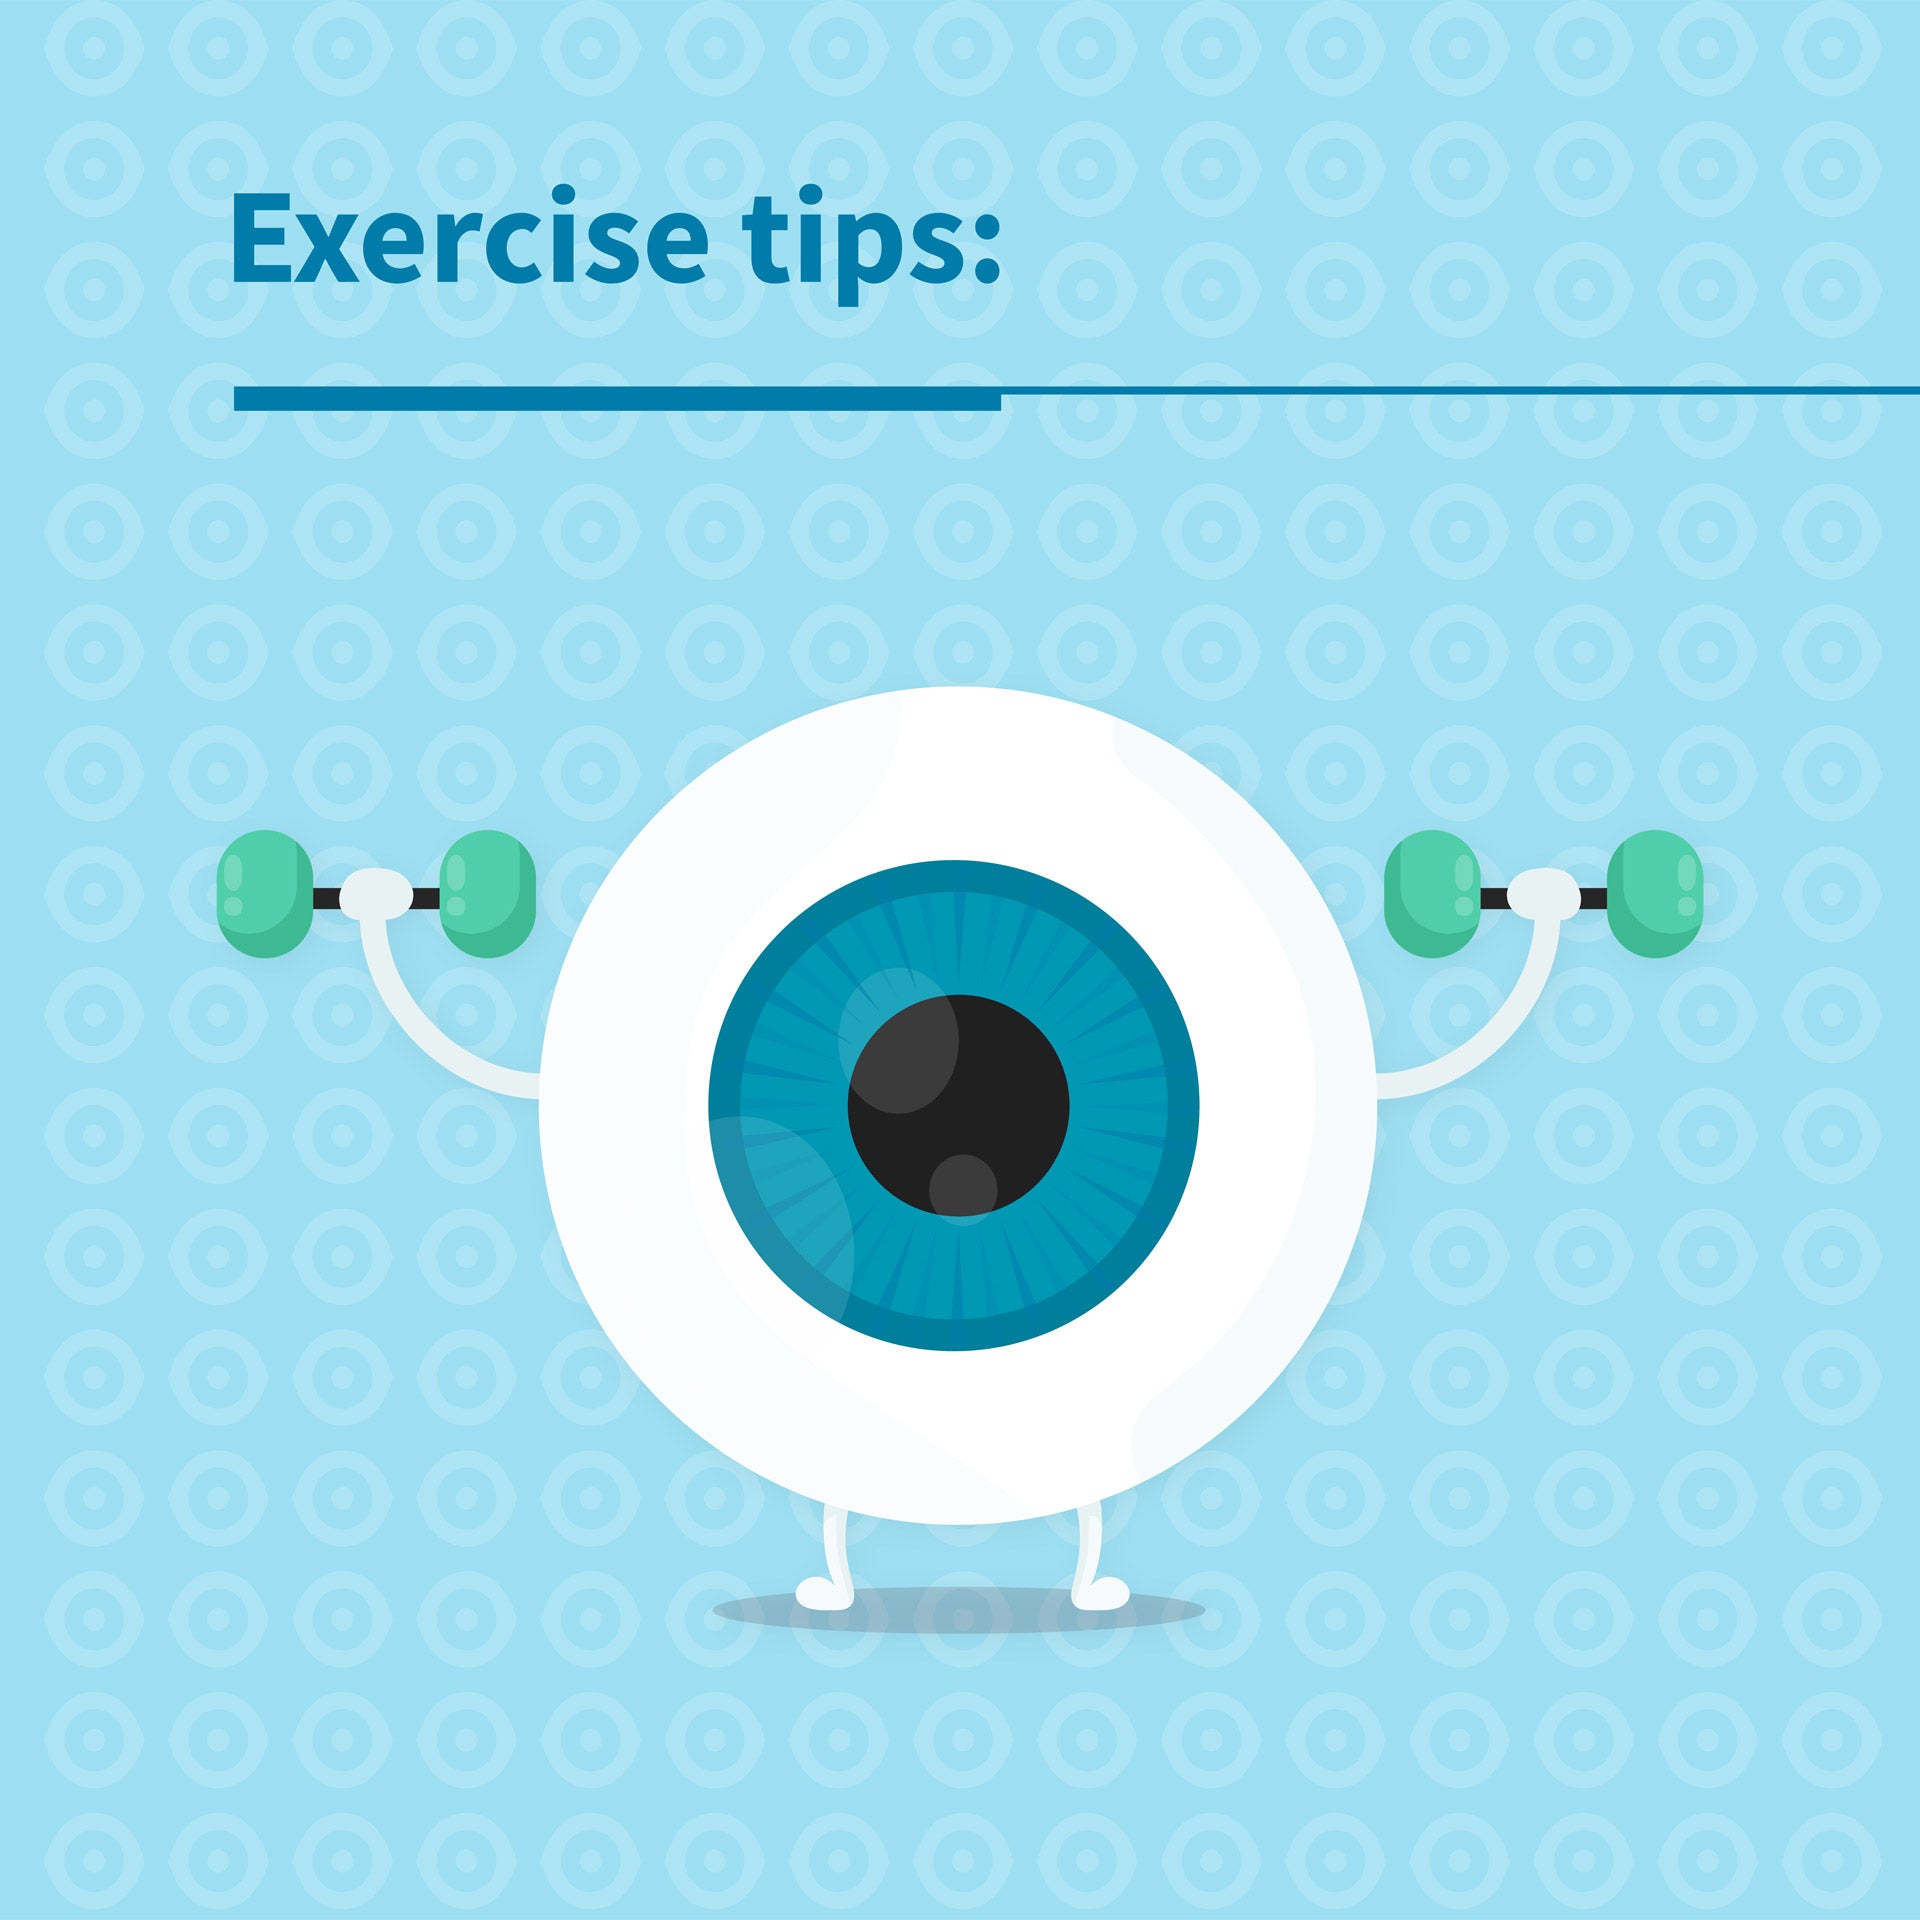 Eye exercises to keep your eyes toned.